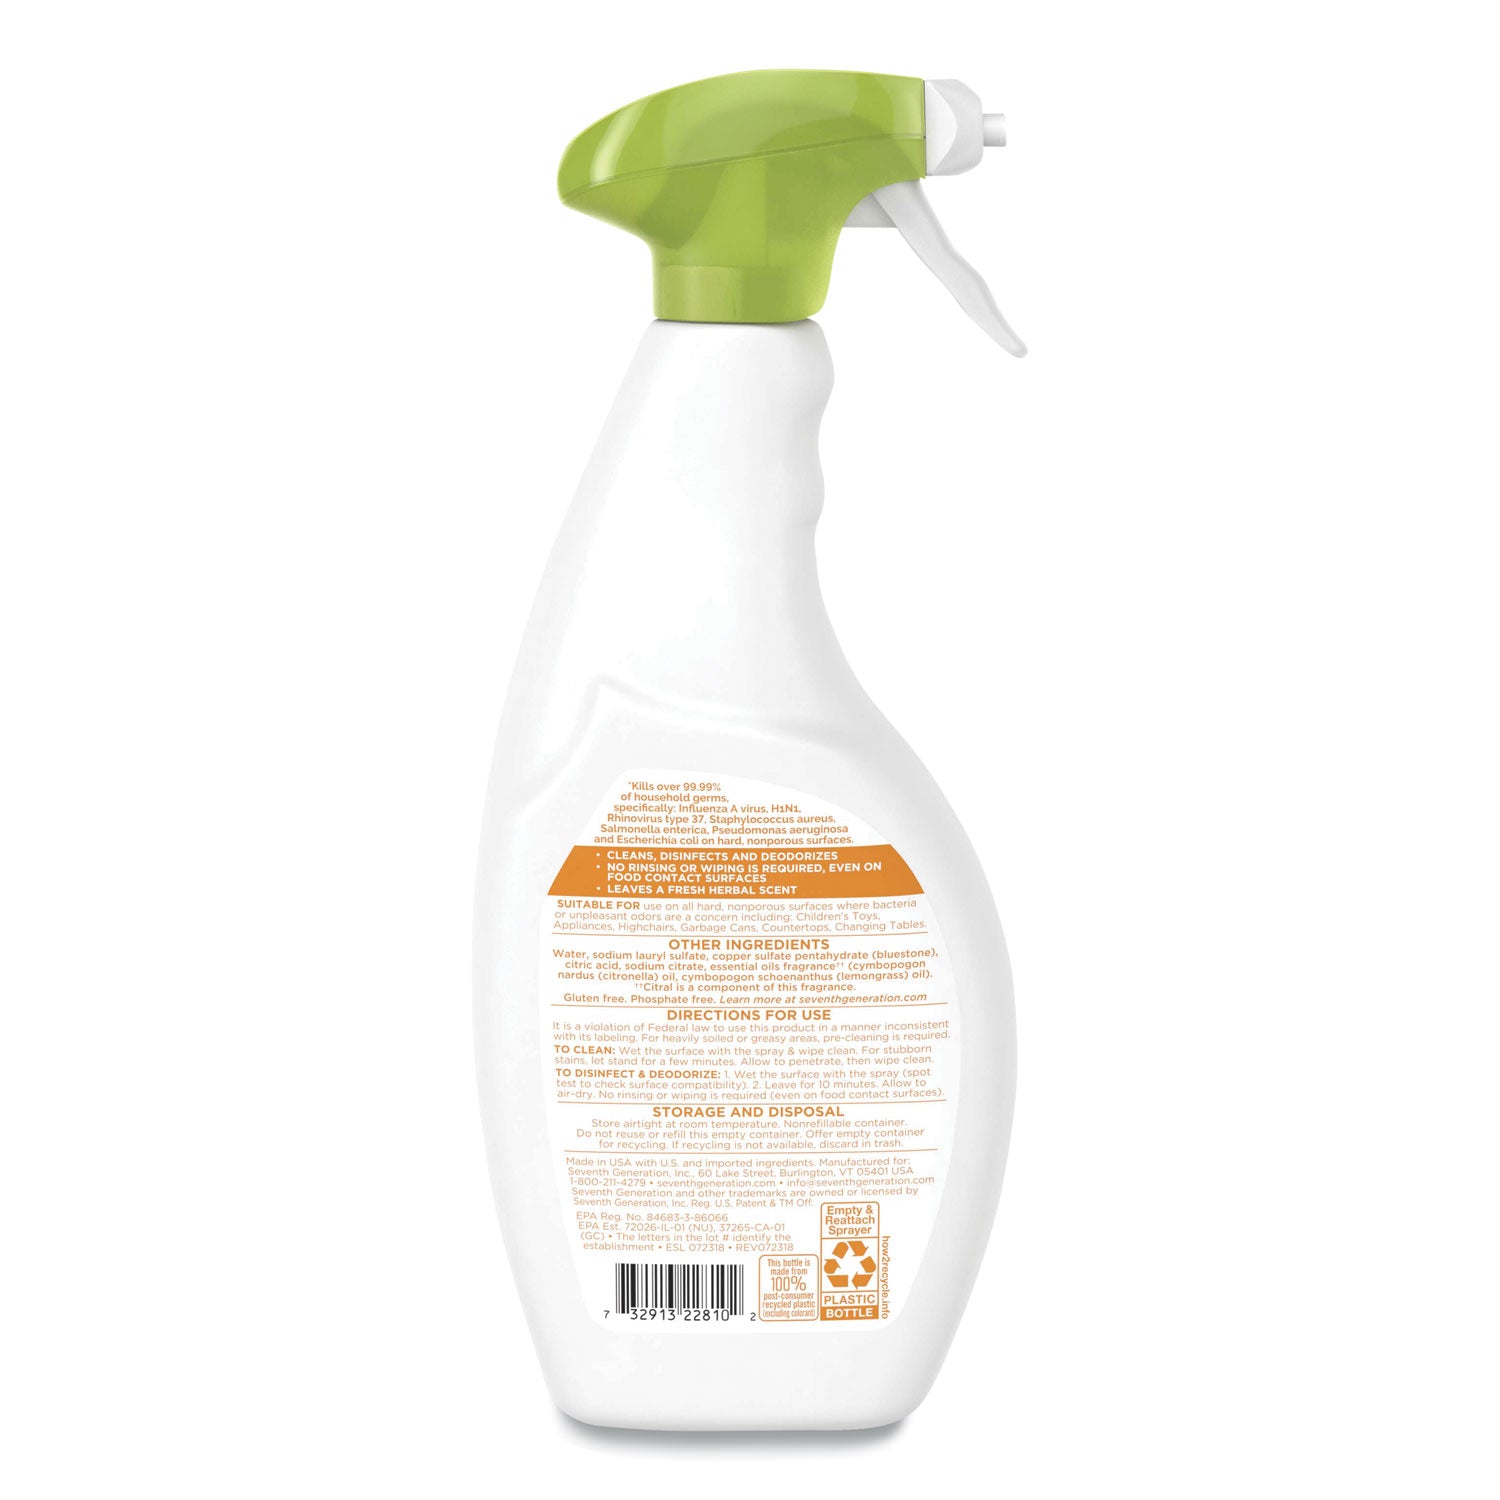 Botanical Disinfecting Multi-Surface Cleaner, 26 oz Spray Bottle, 8/Carton - 